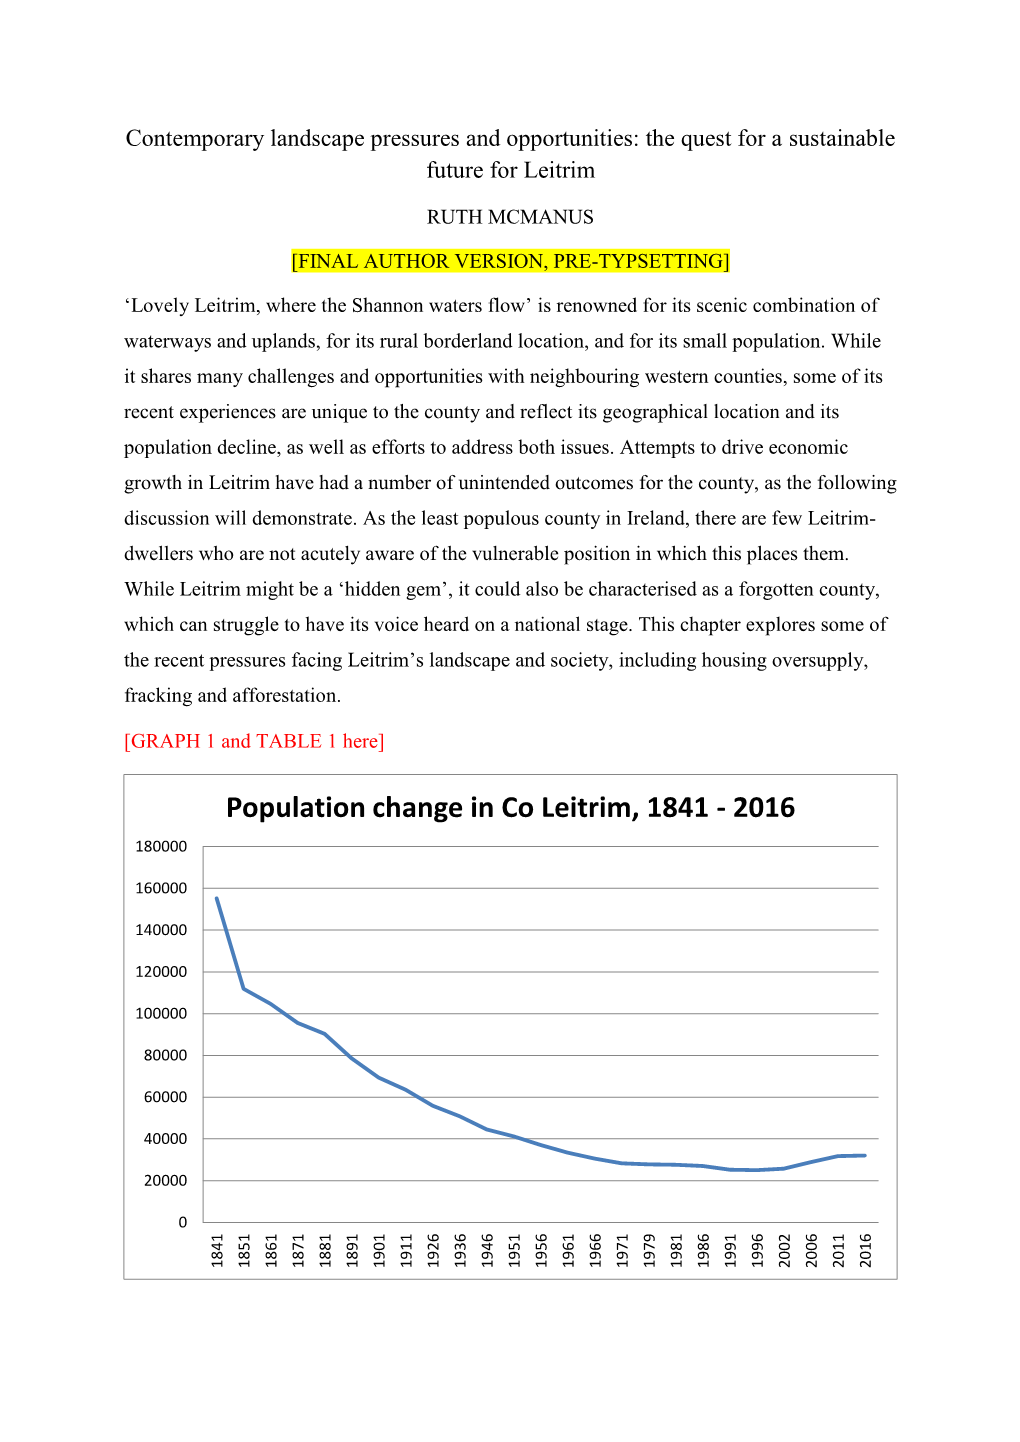 Population Change in Co Leitrim, 1841 - 2016 180000